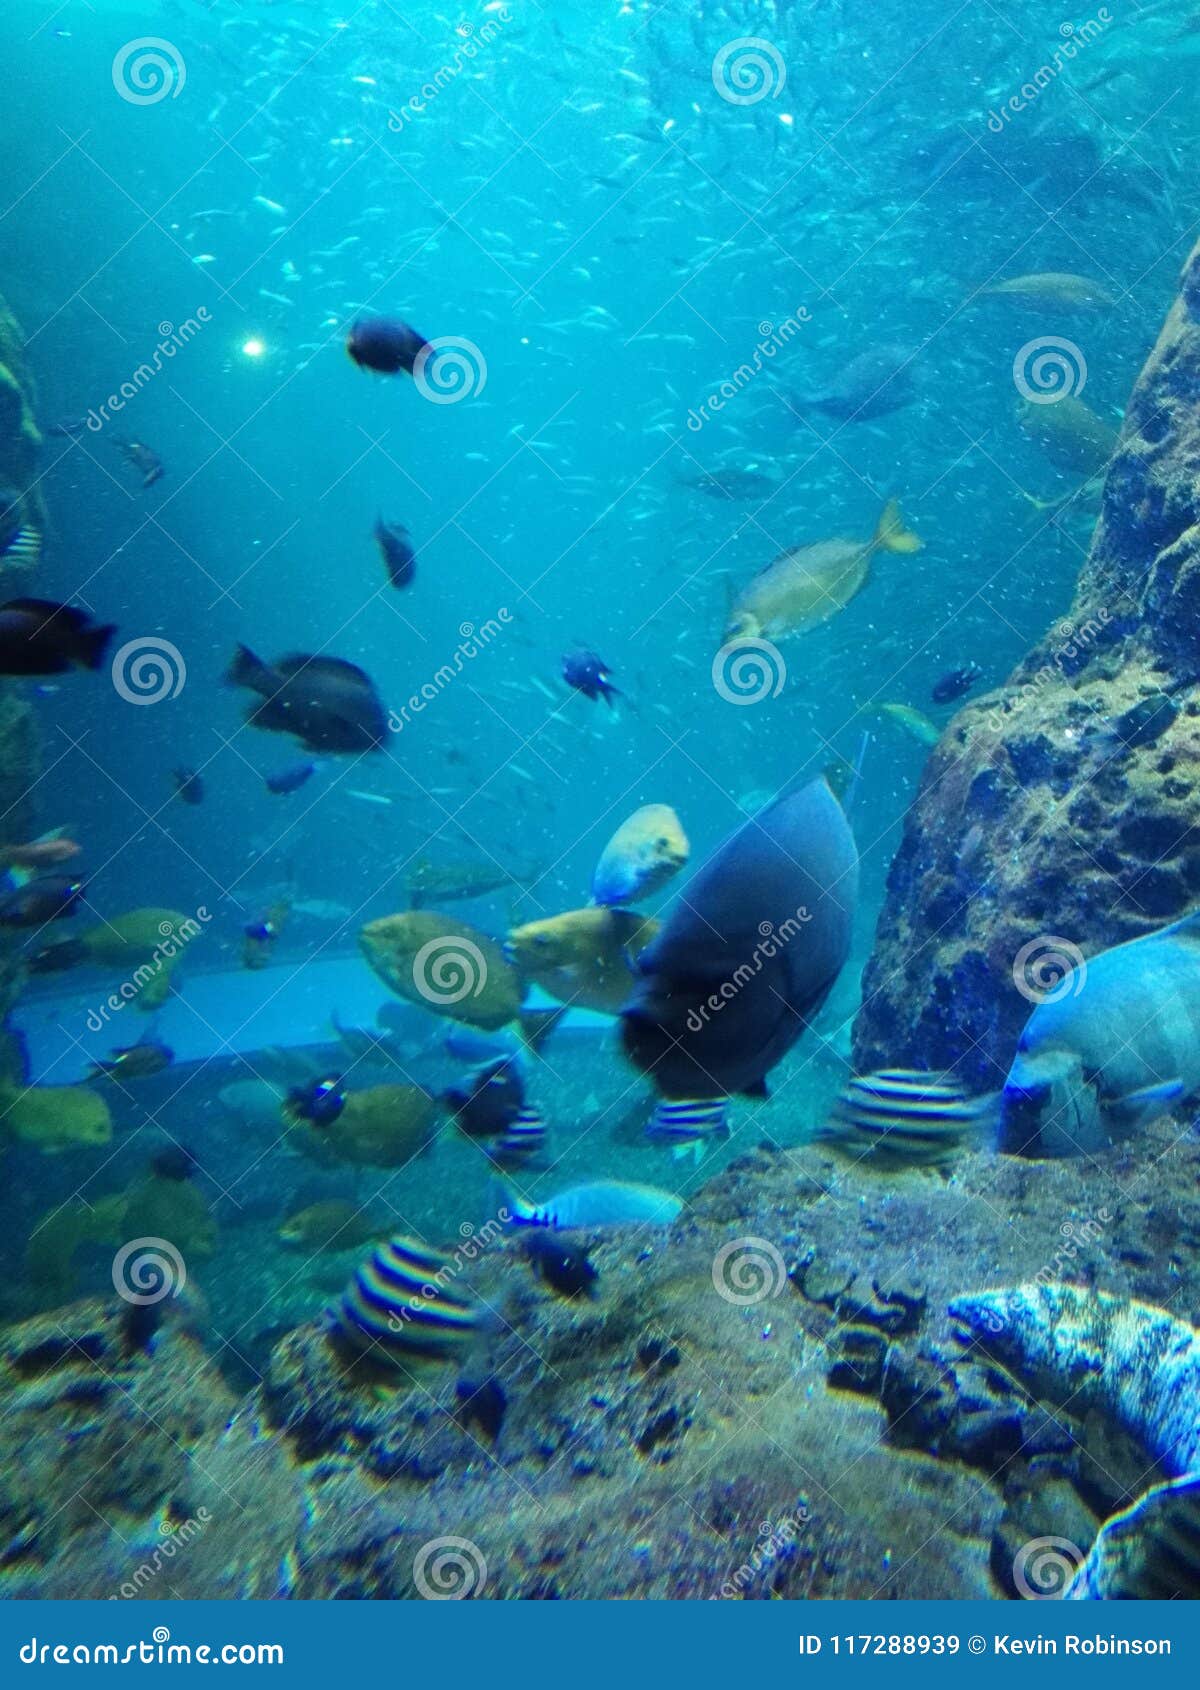 enoshima sea aquarium